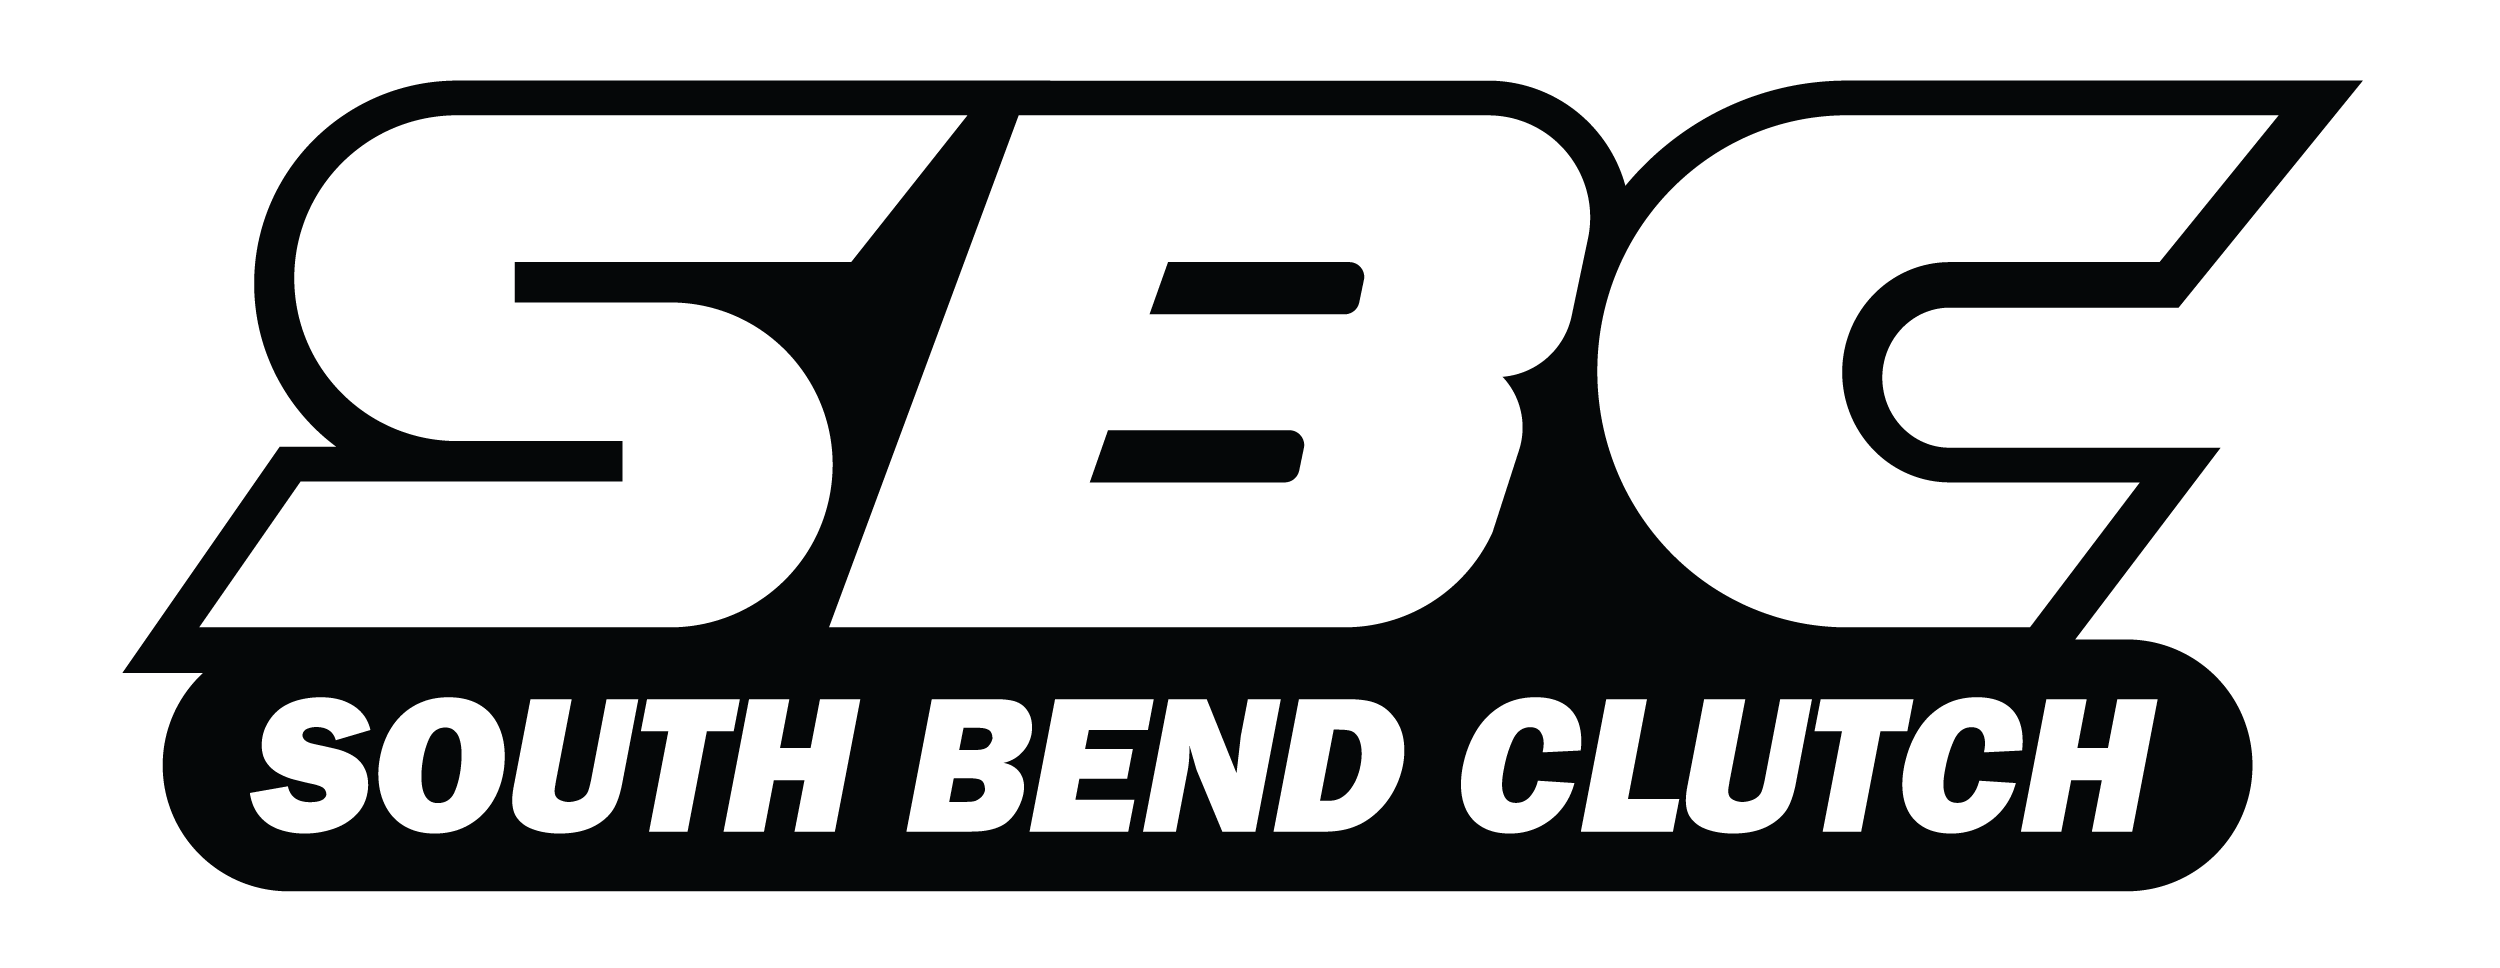 South Bend Clutch Brand – Glacier Diesel Power